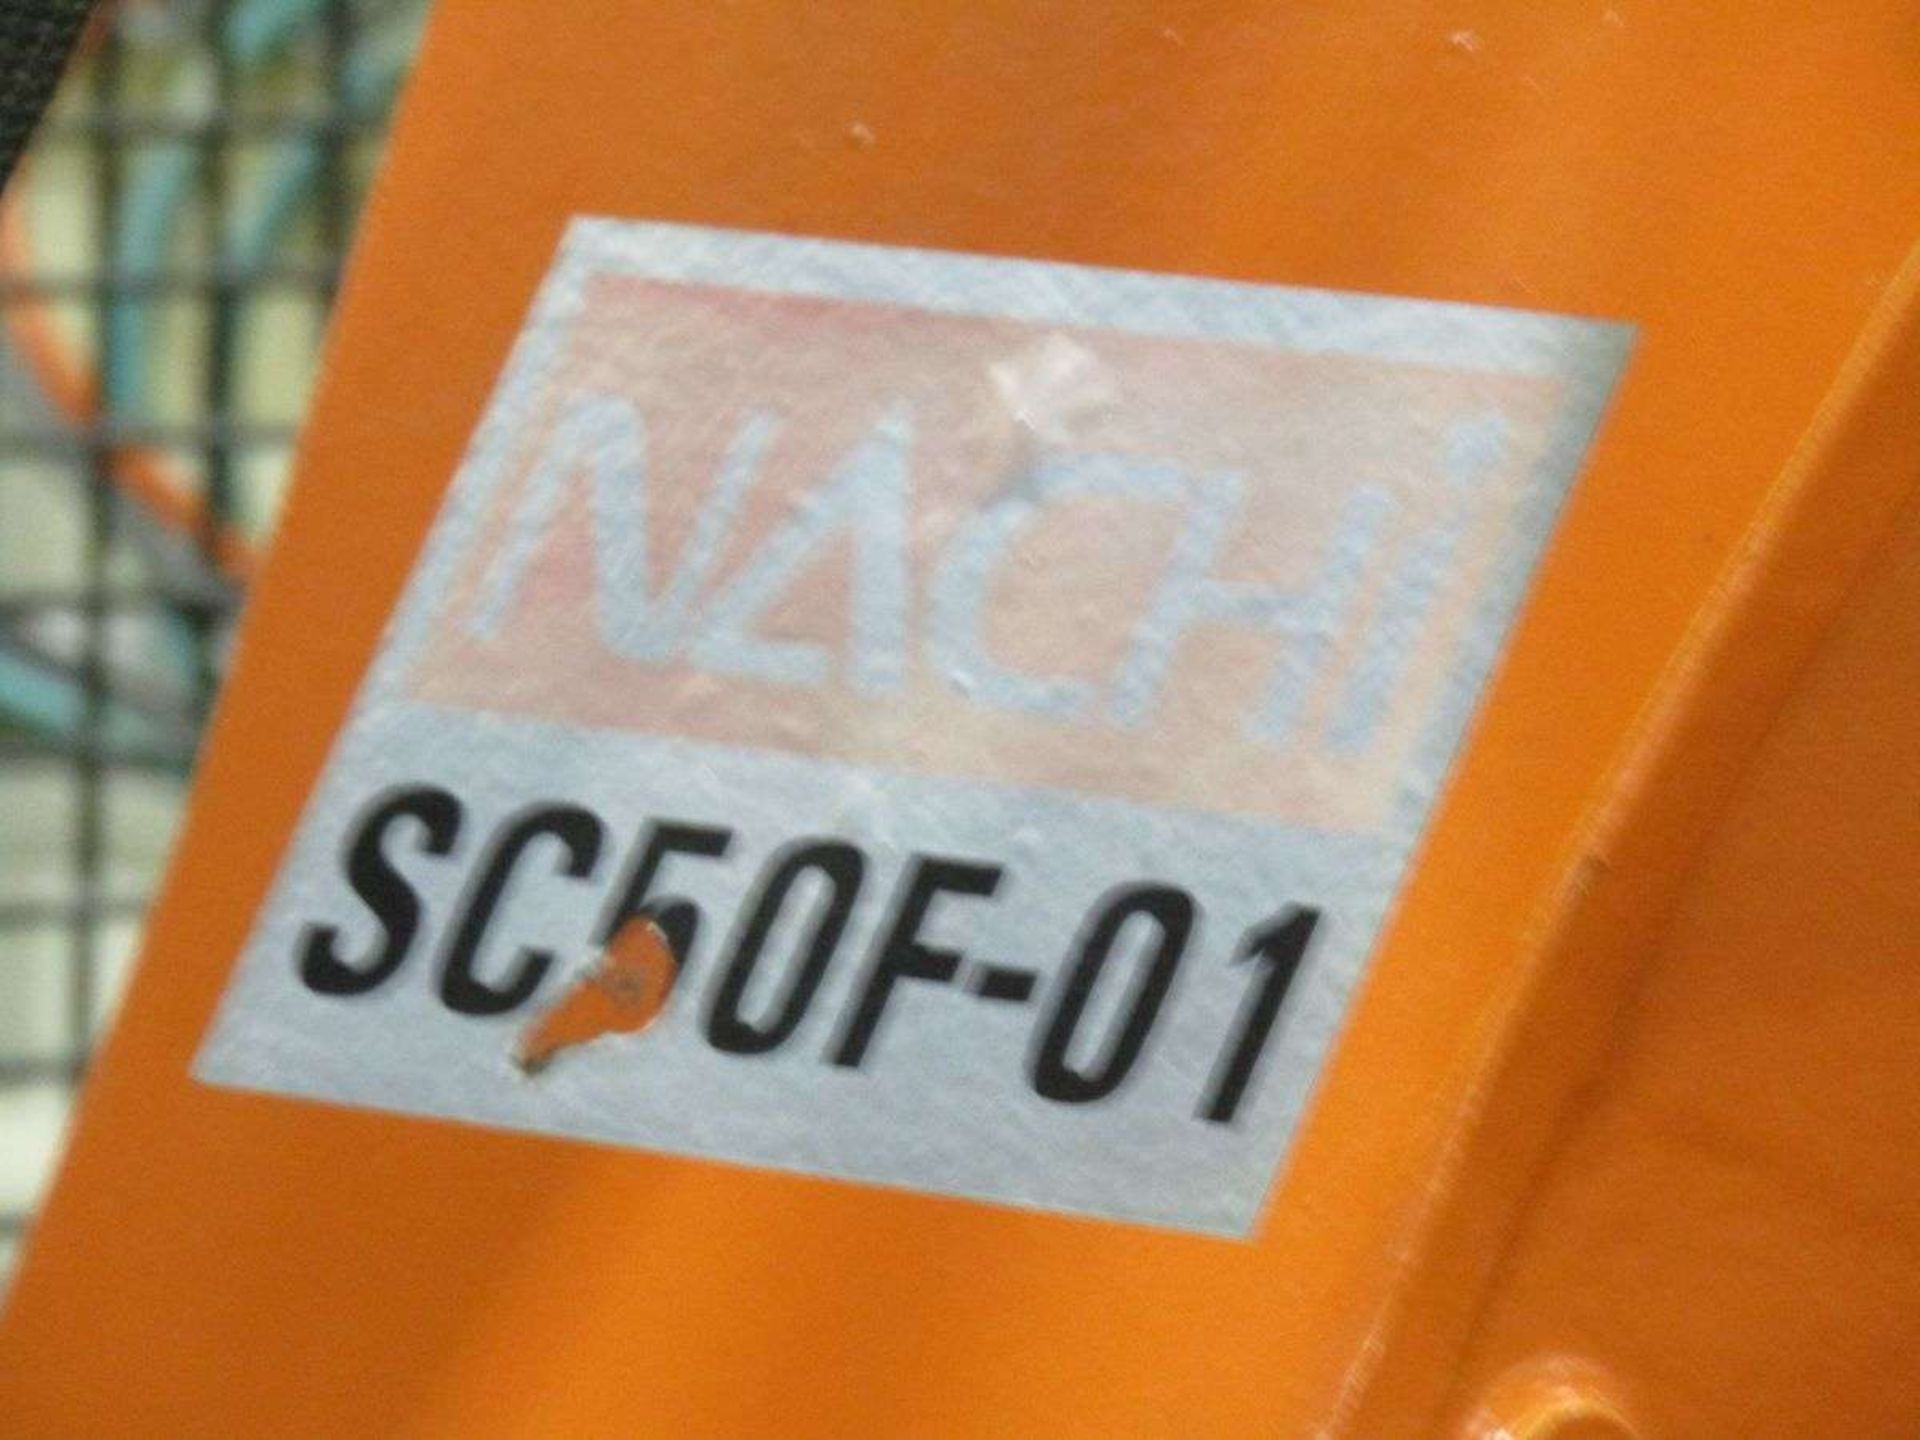 2003 Nachi SC50F-01 6-Axis Robot - Image 4 of 11